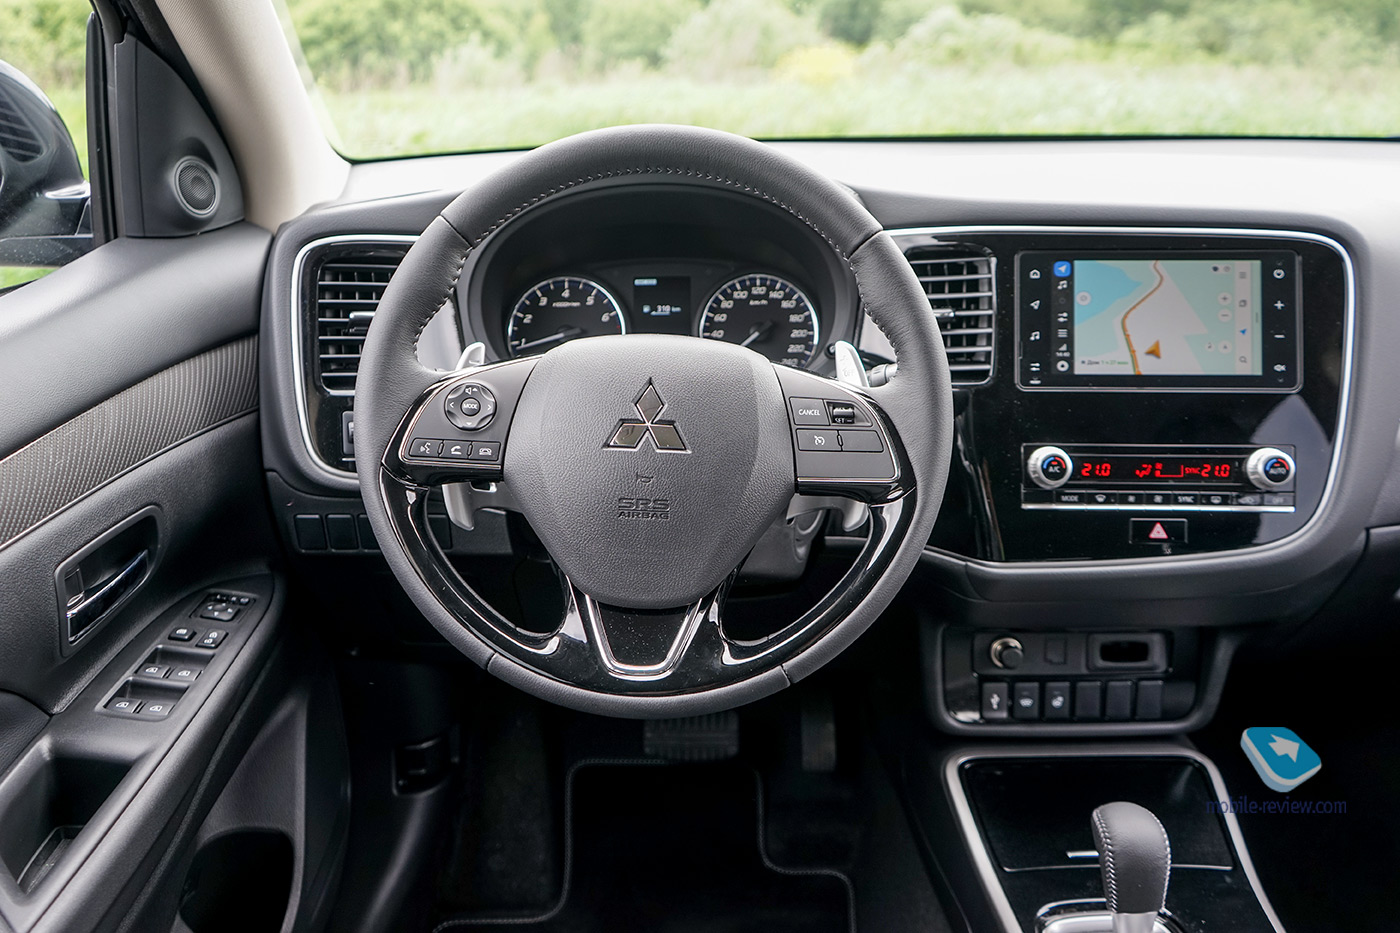 Mitsubishi Outlander III test. Now with Yandex.Auto